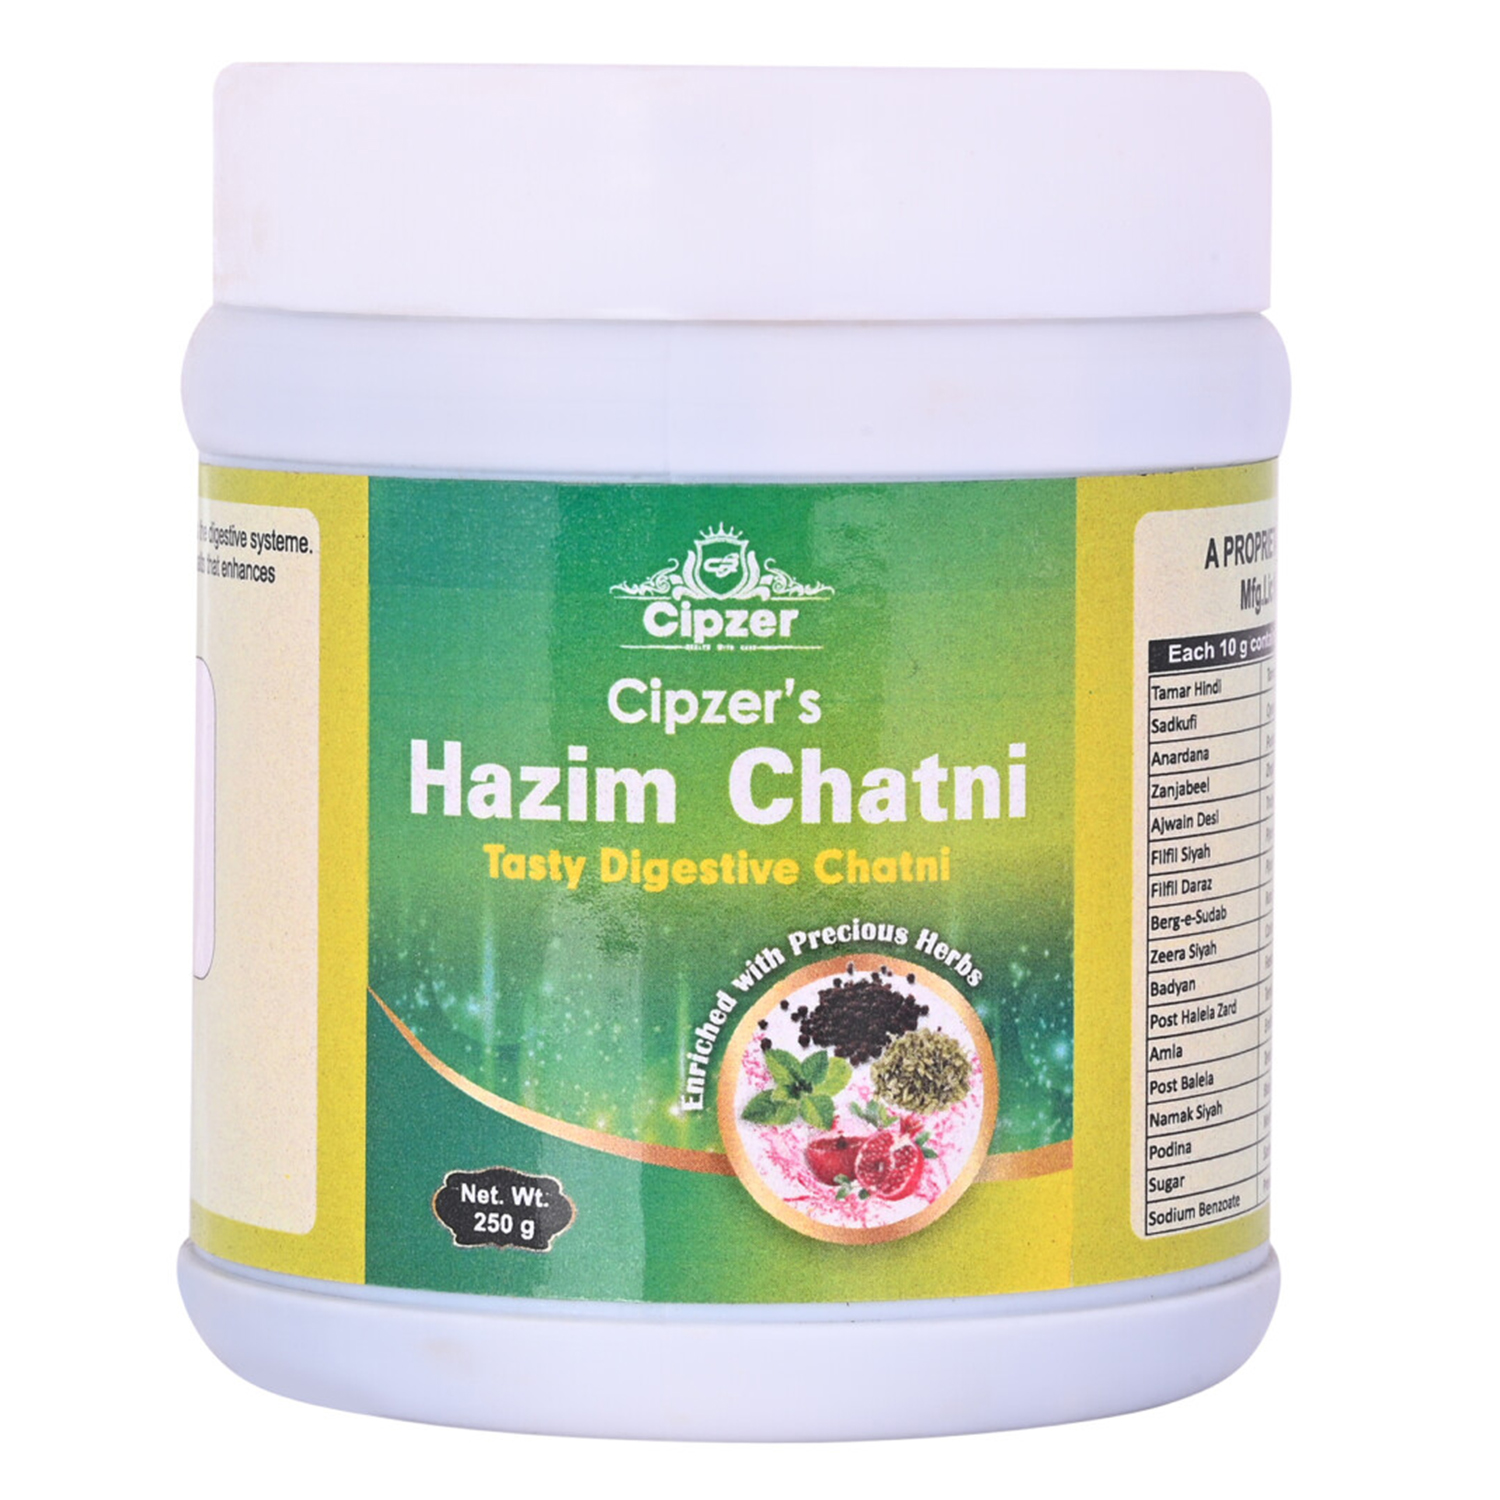 Buy Cipzer Hazim Chatni at Best Price Online